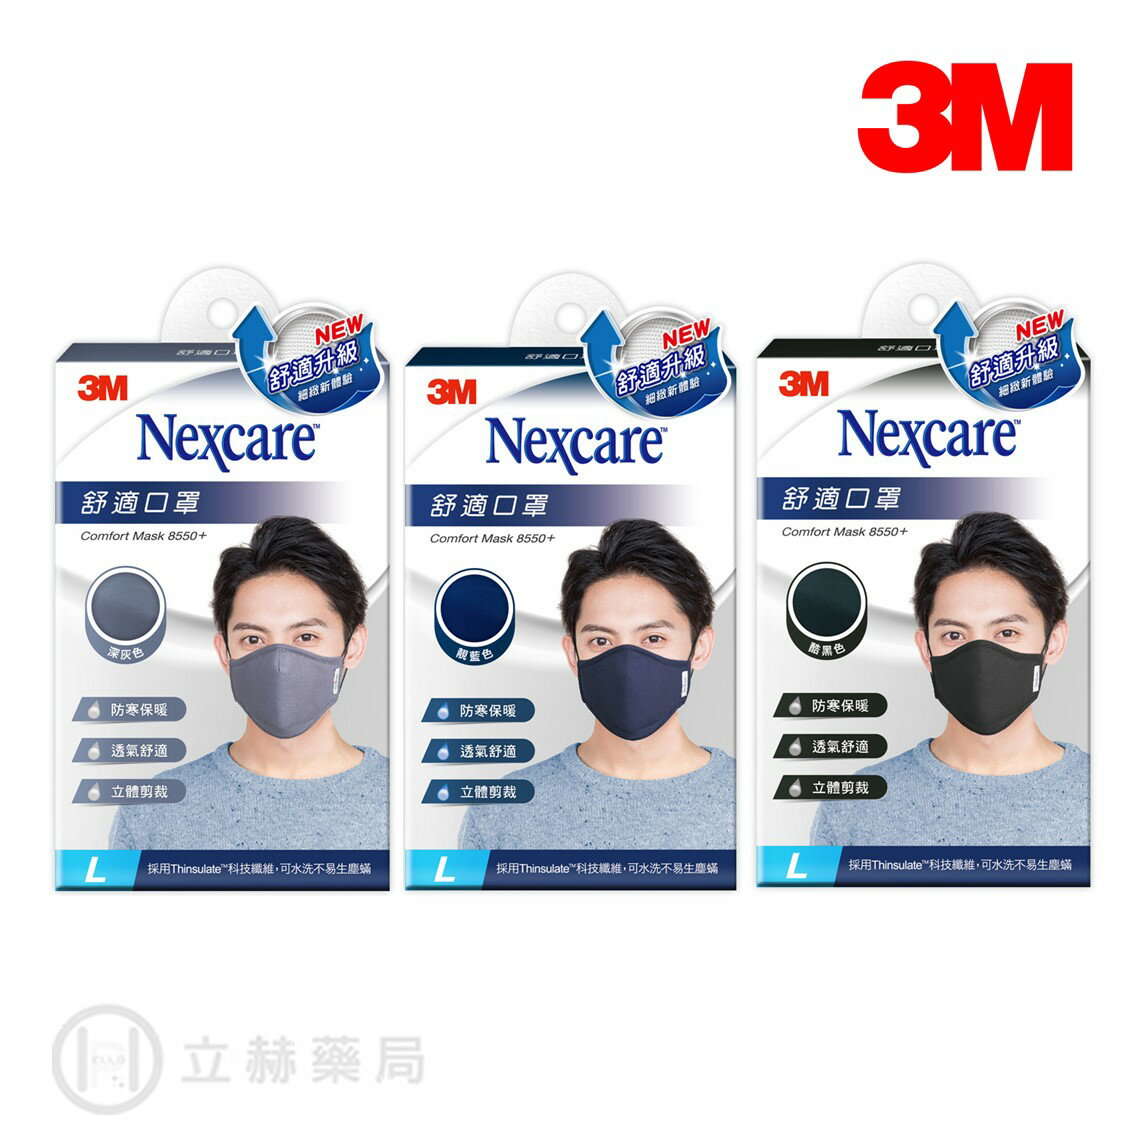 3M Nexcare 舒適口罩升級款 L號 8550+ 酷黑 深灰 靛藍 舒適透氣 立體剪裁 舒適升級【立赫藥局】